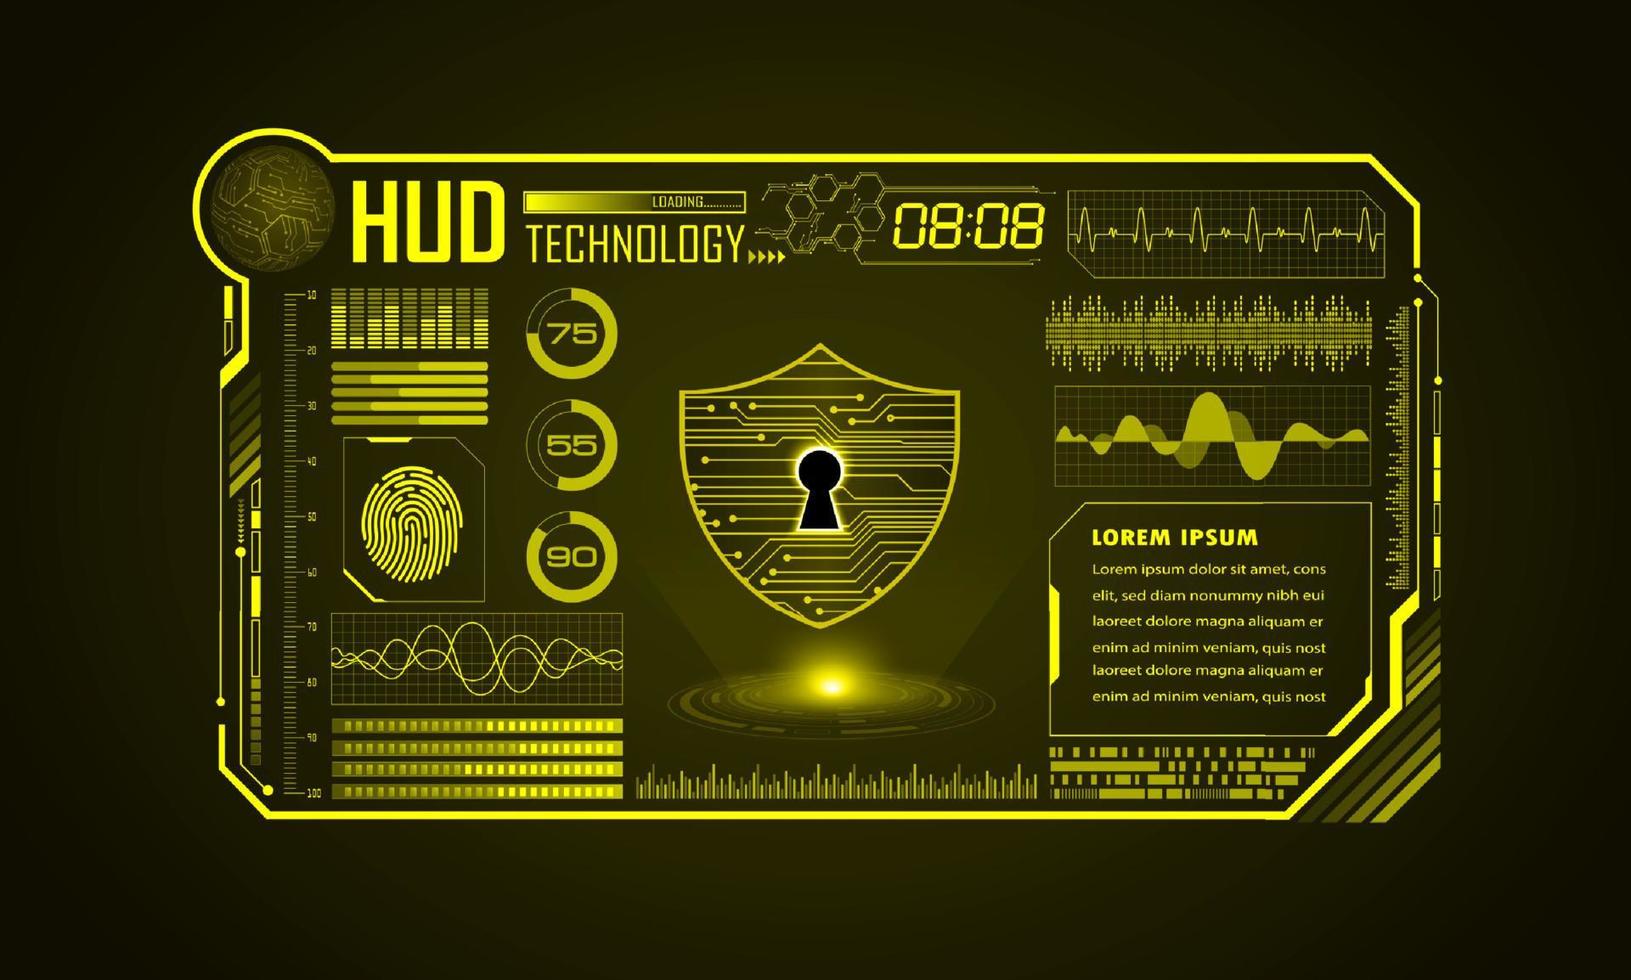 xxxxxModern HUD Technology Screen Background with padlock vector